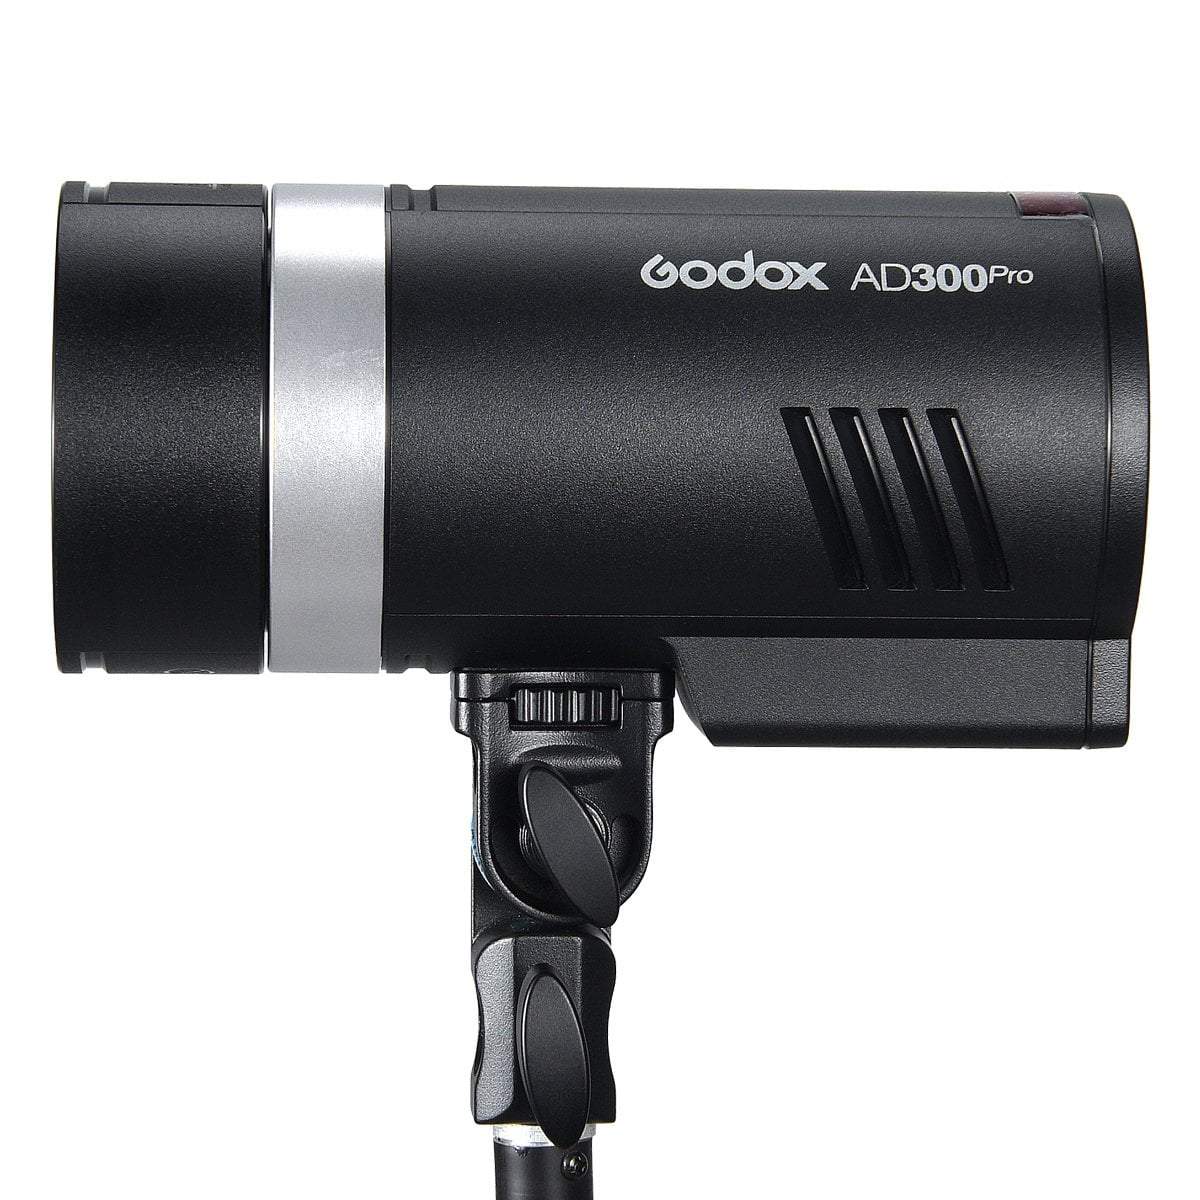    Godox Witstro AD300Pro   TTL   Ultra-mart